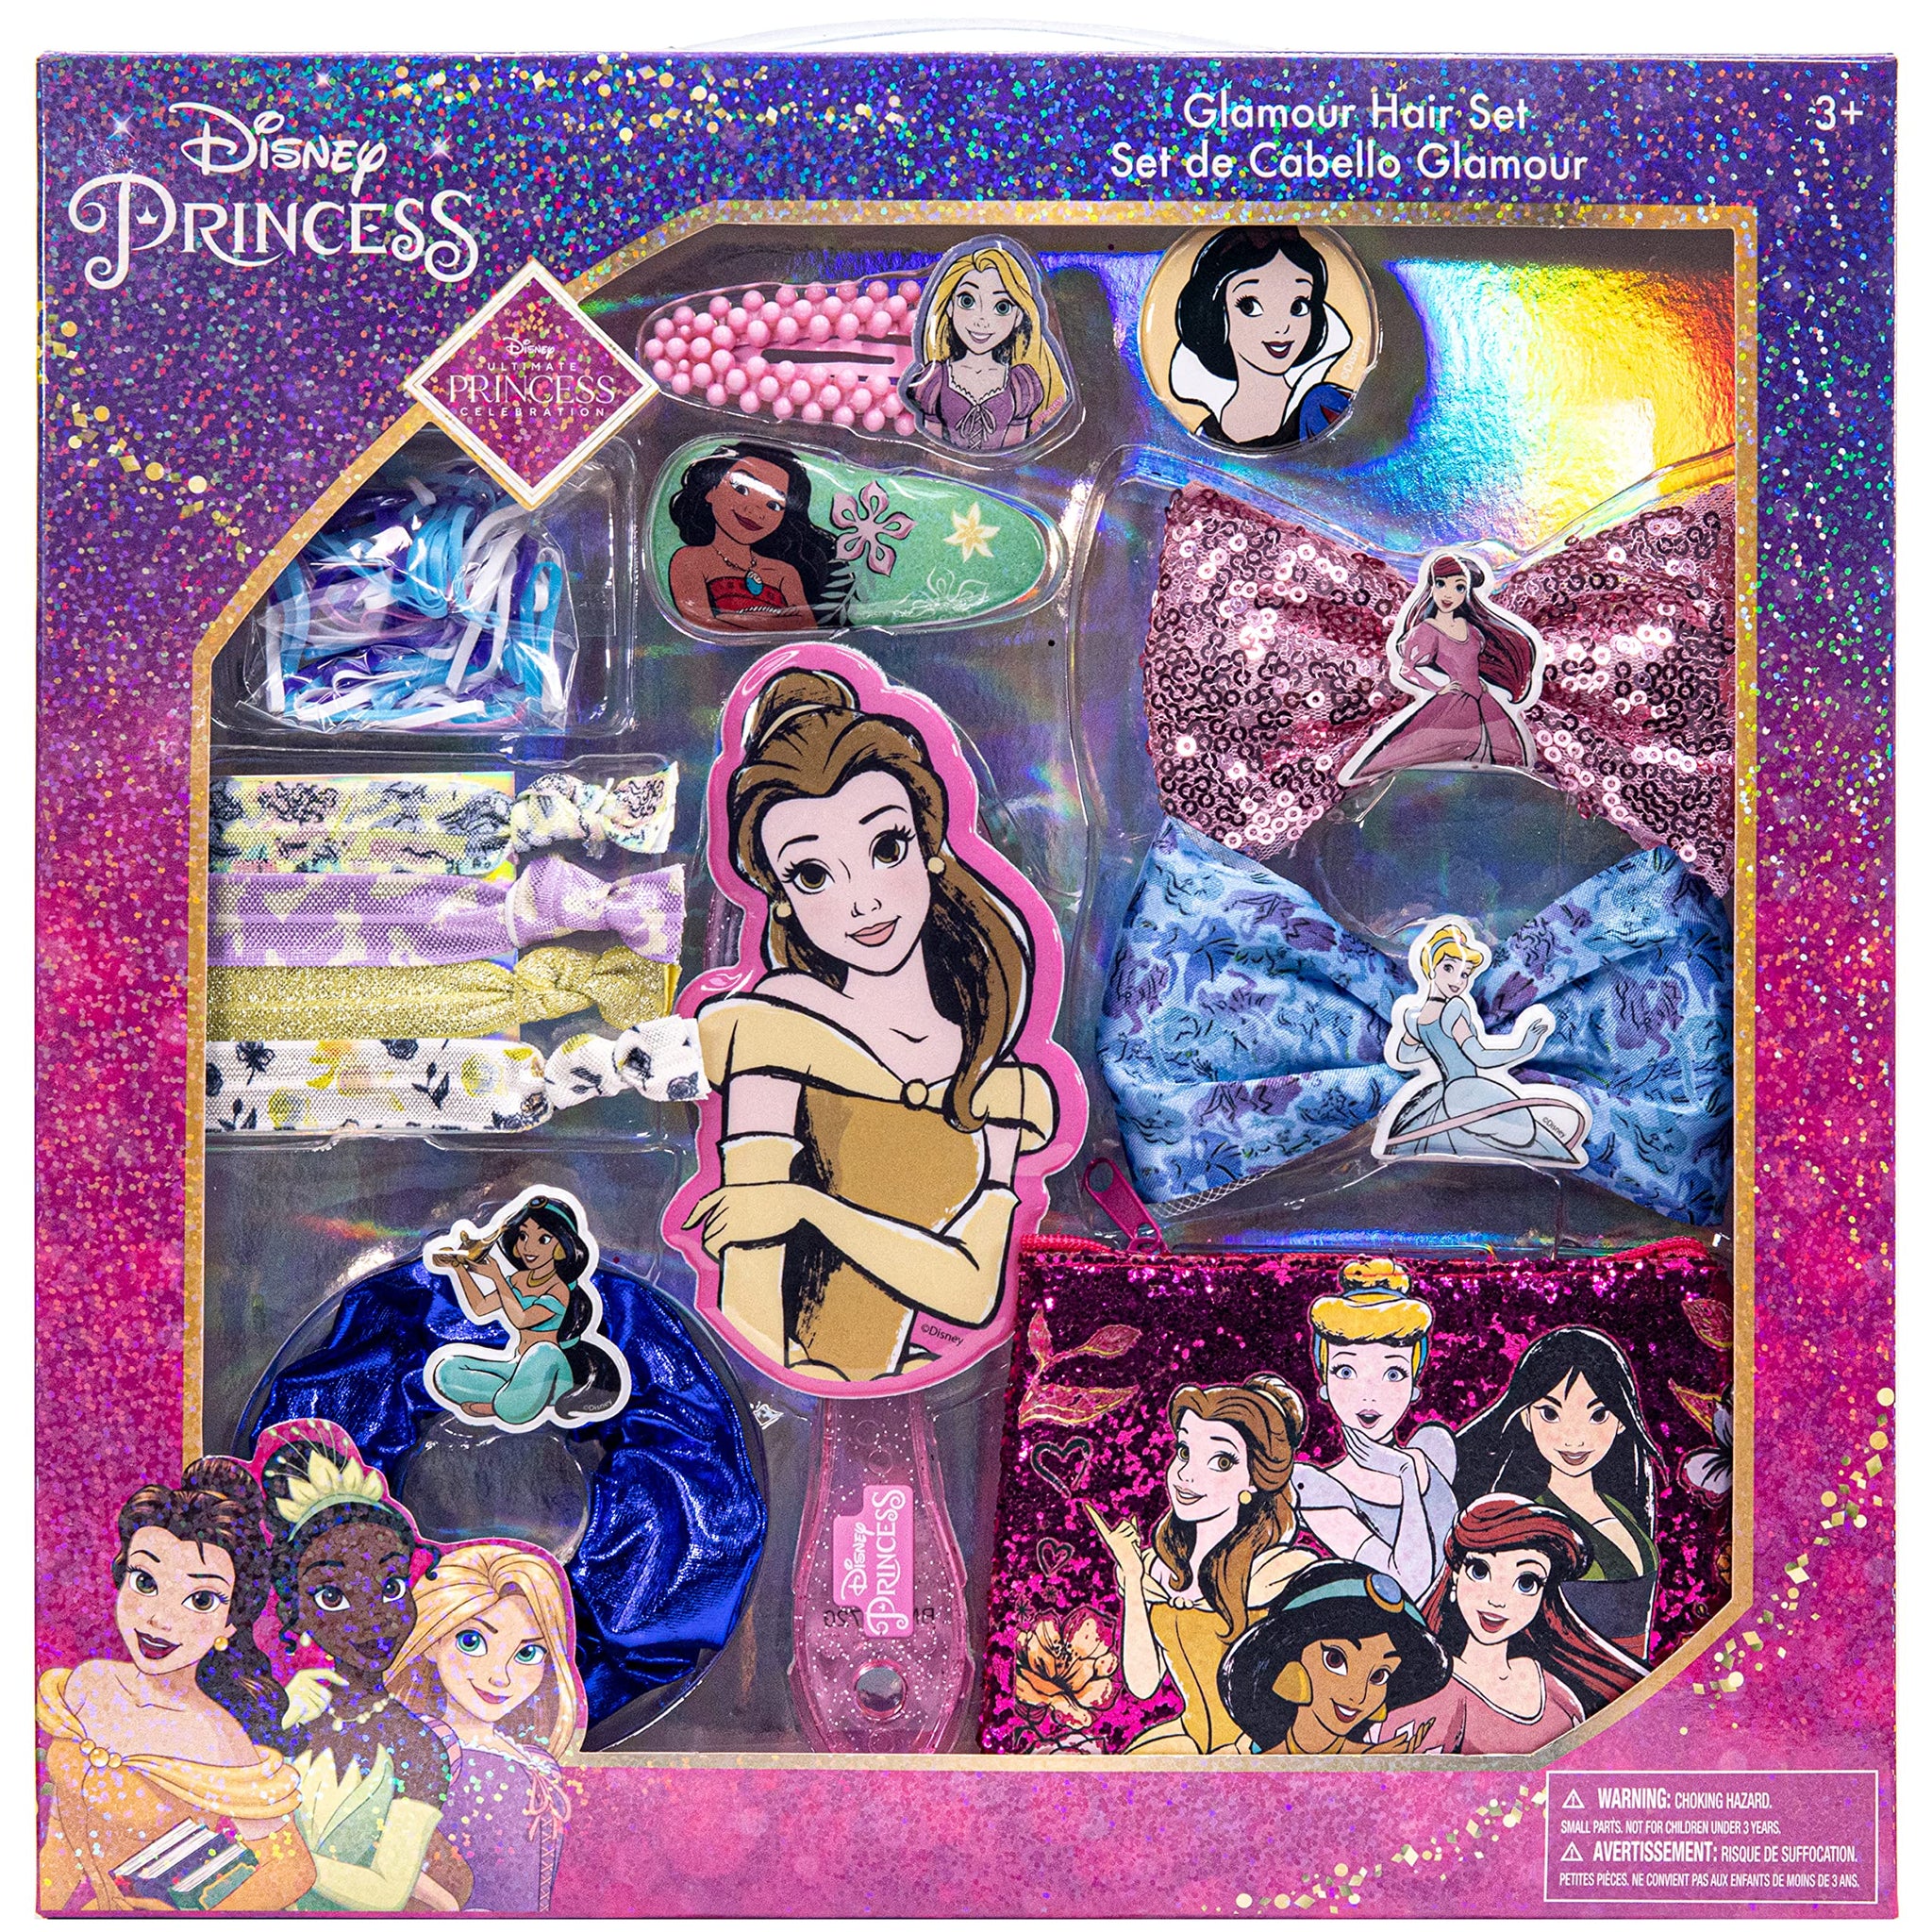 Disney #princesses #hair - image #891961 on Favim.com